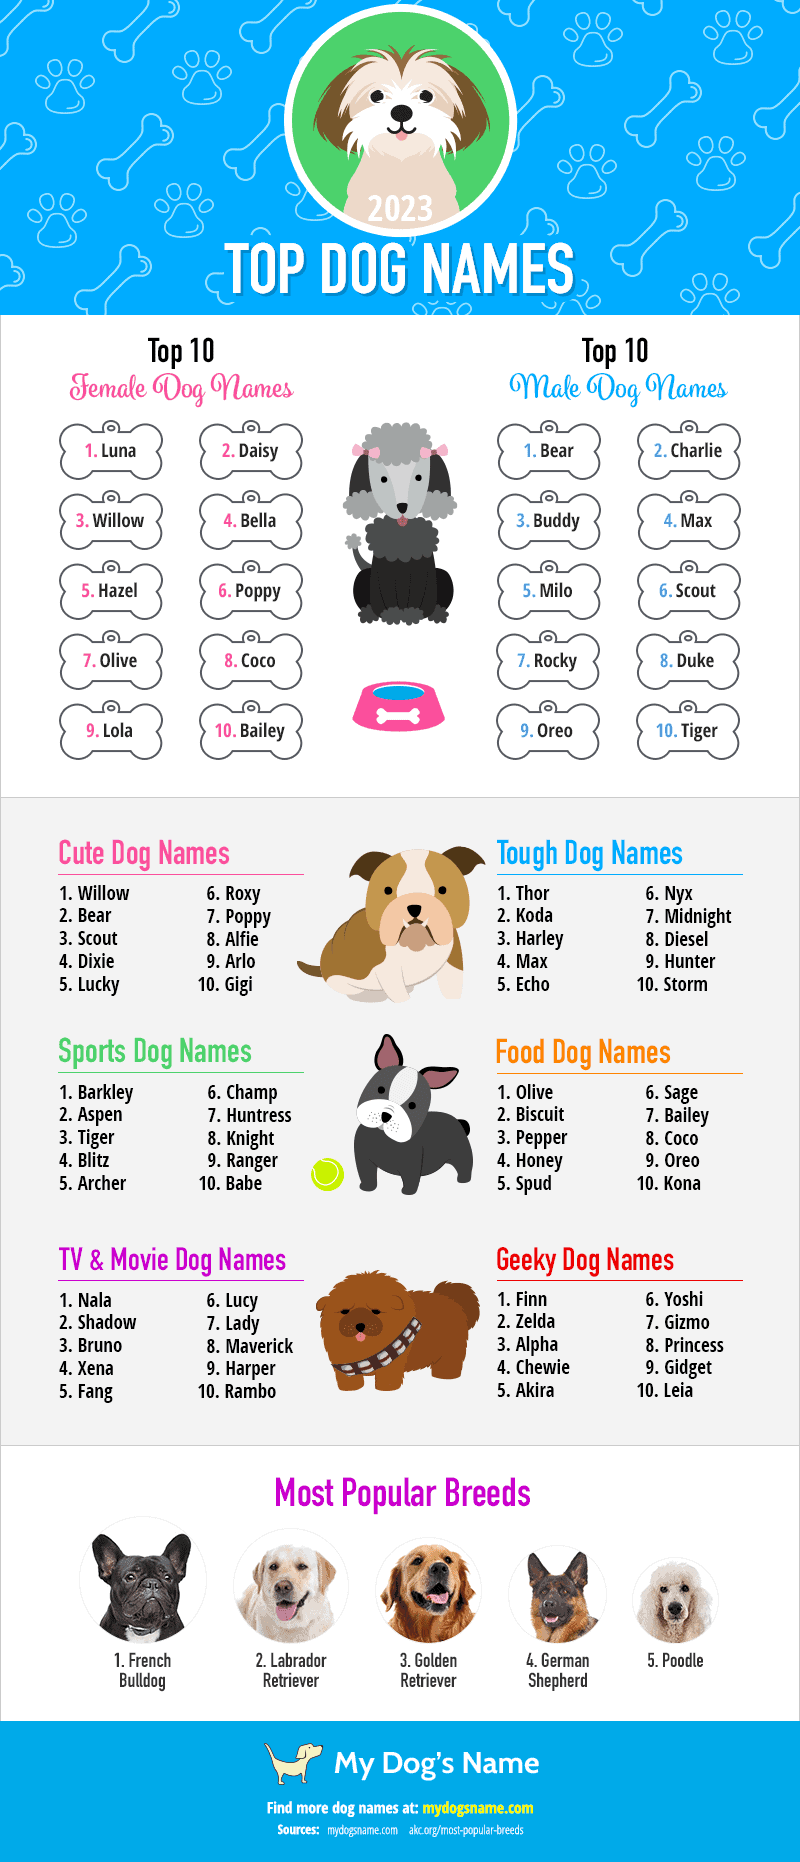 2023 Top Dog Names 1 